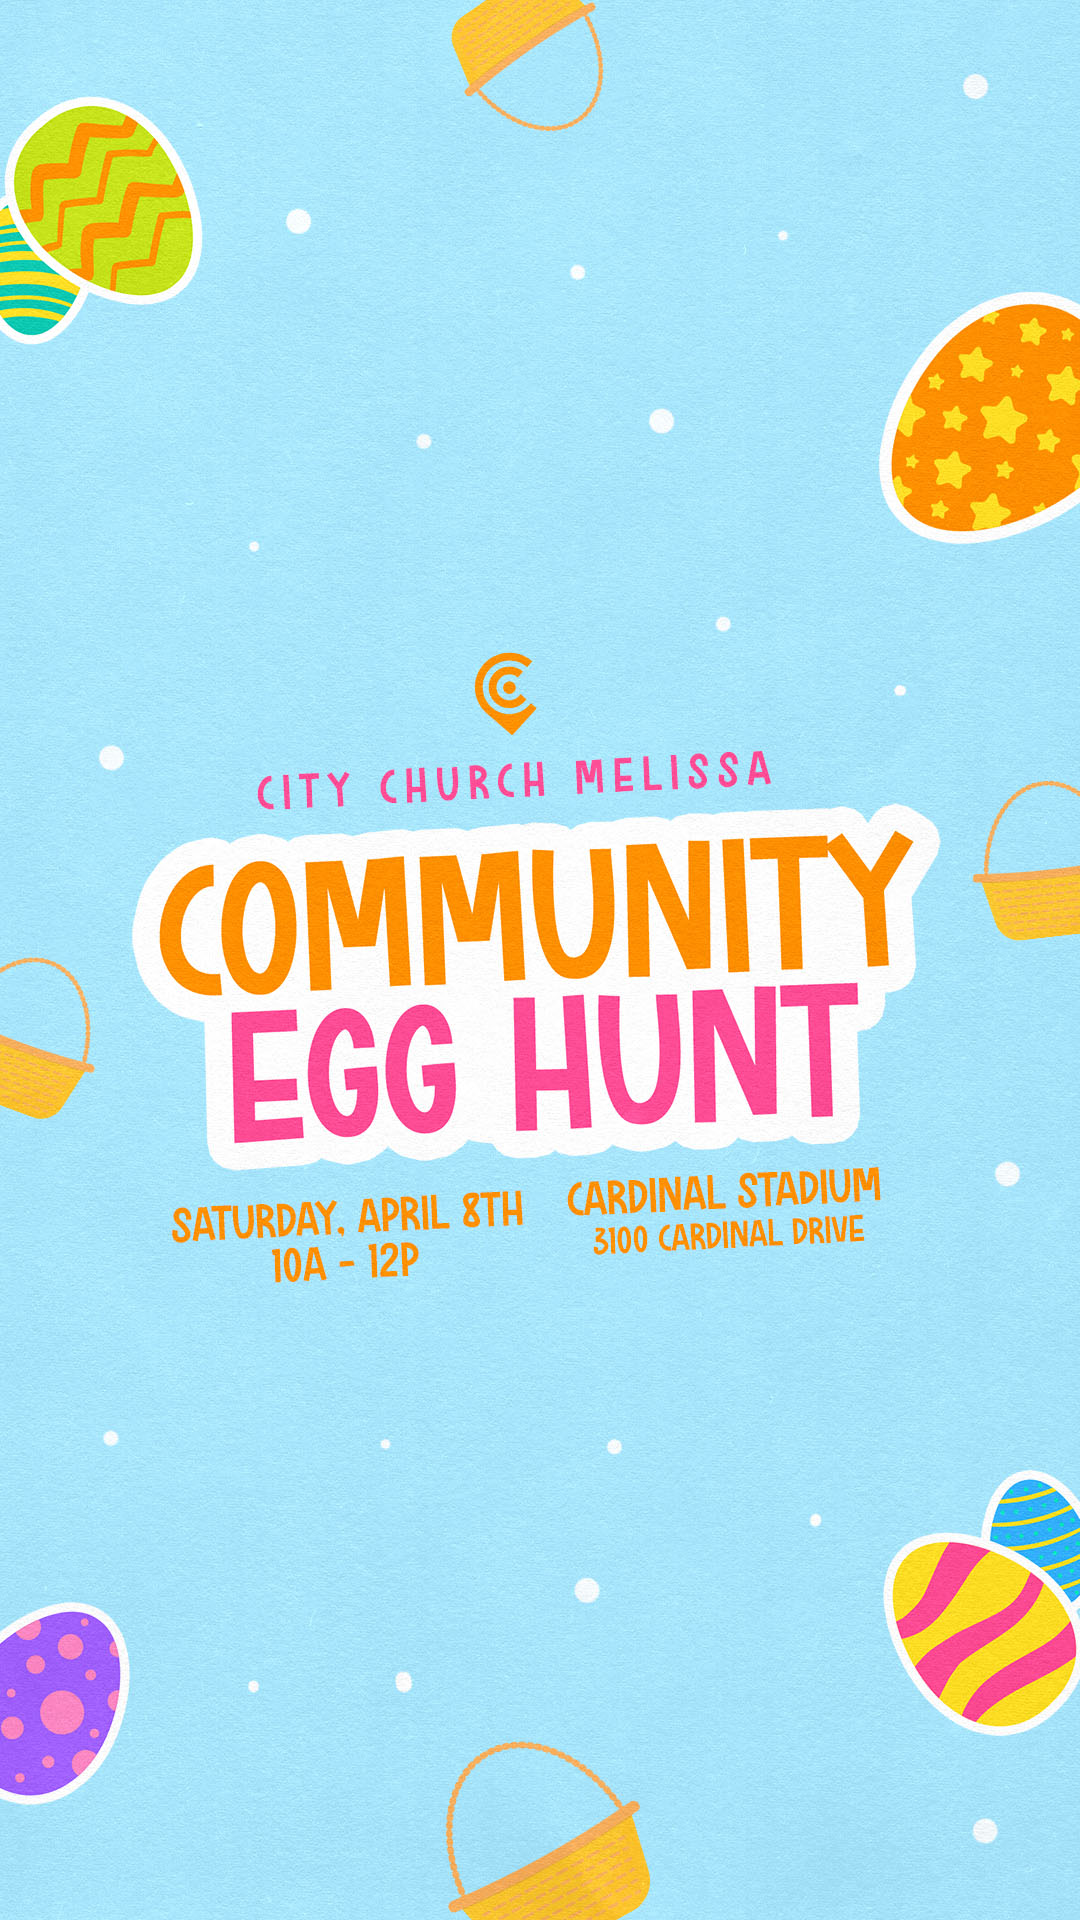 Community Egg Hunt - Social Stories Title (1080x1920)